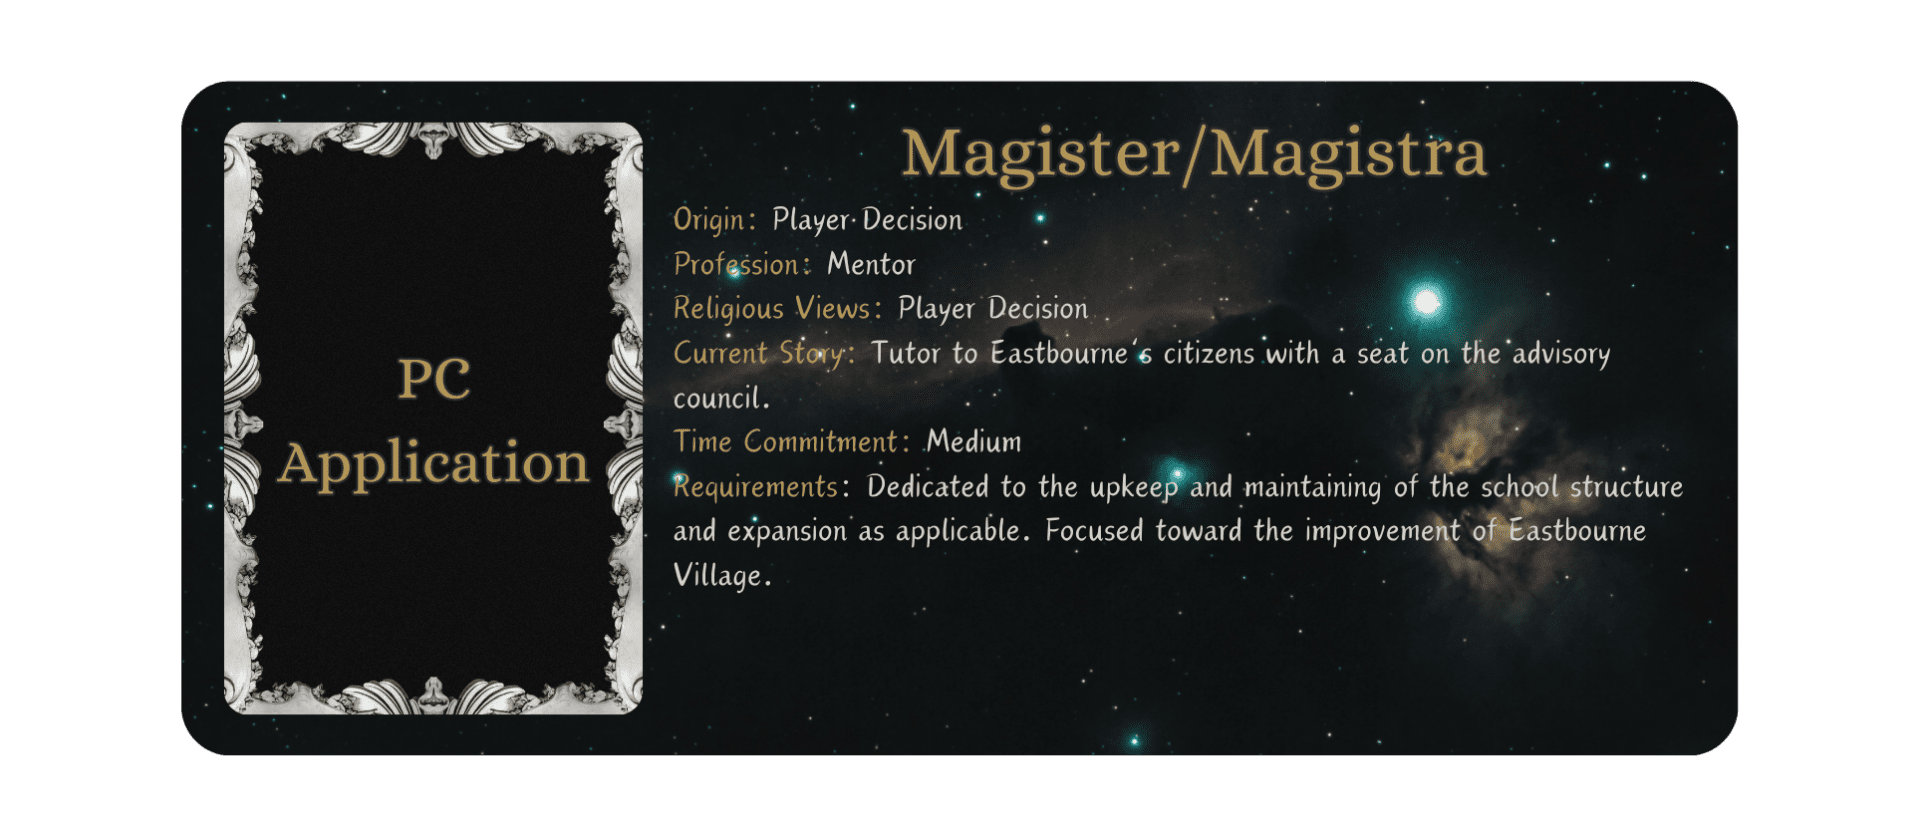 Click to select Magister/Magistra